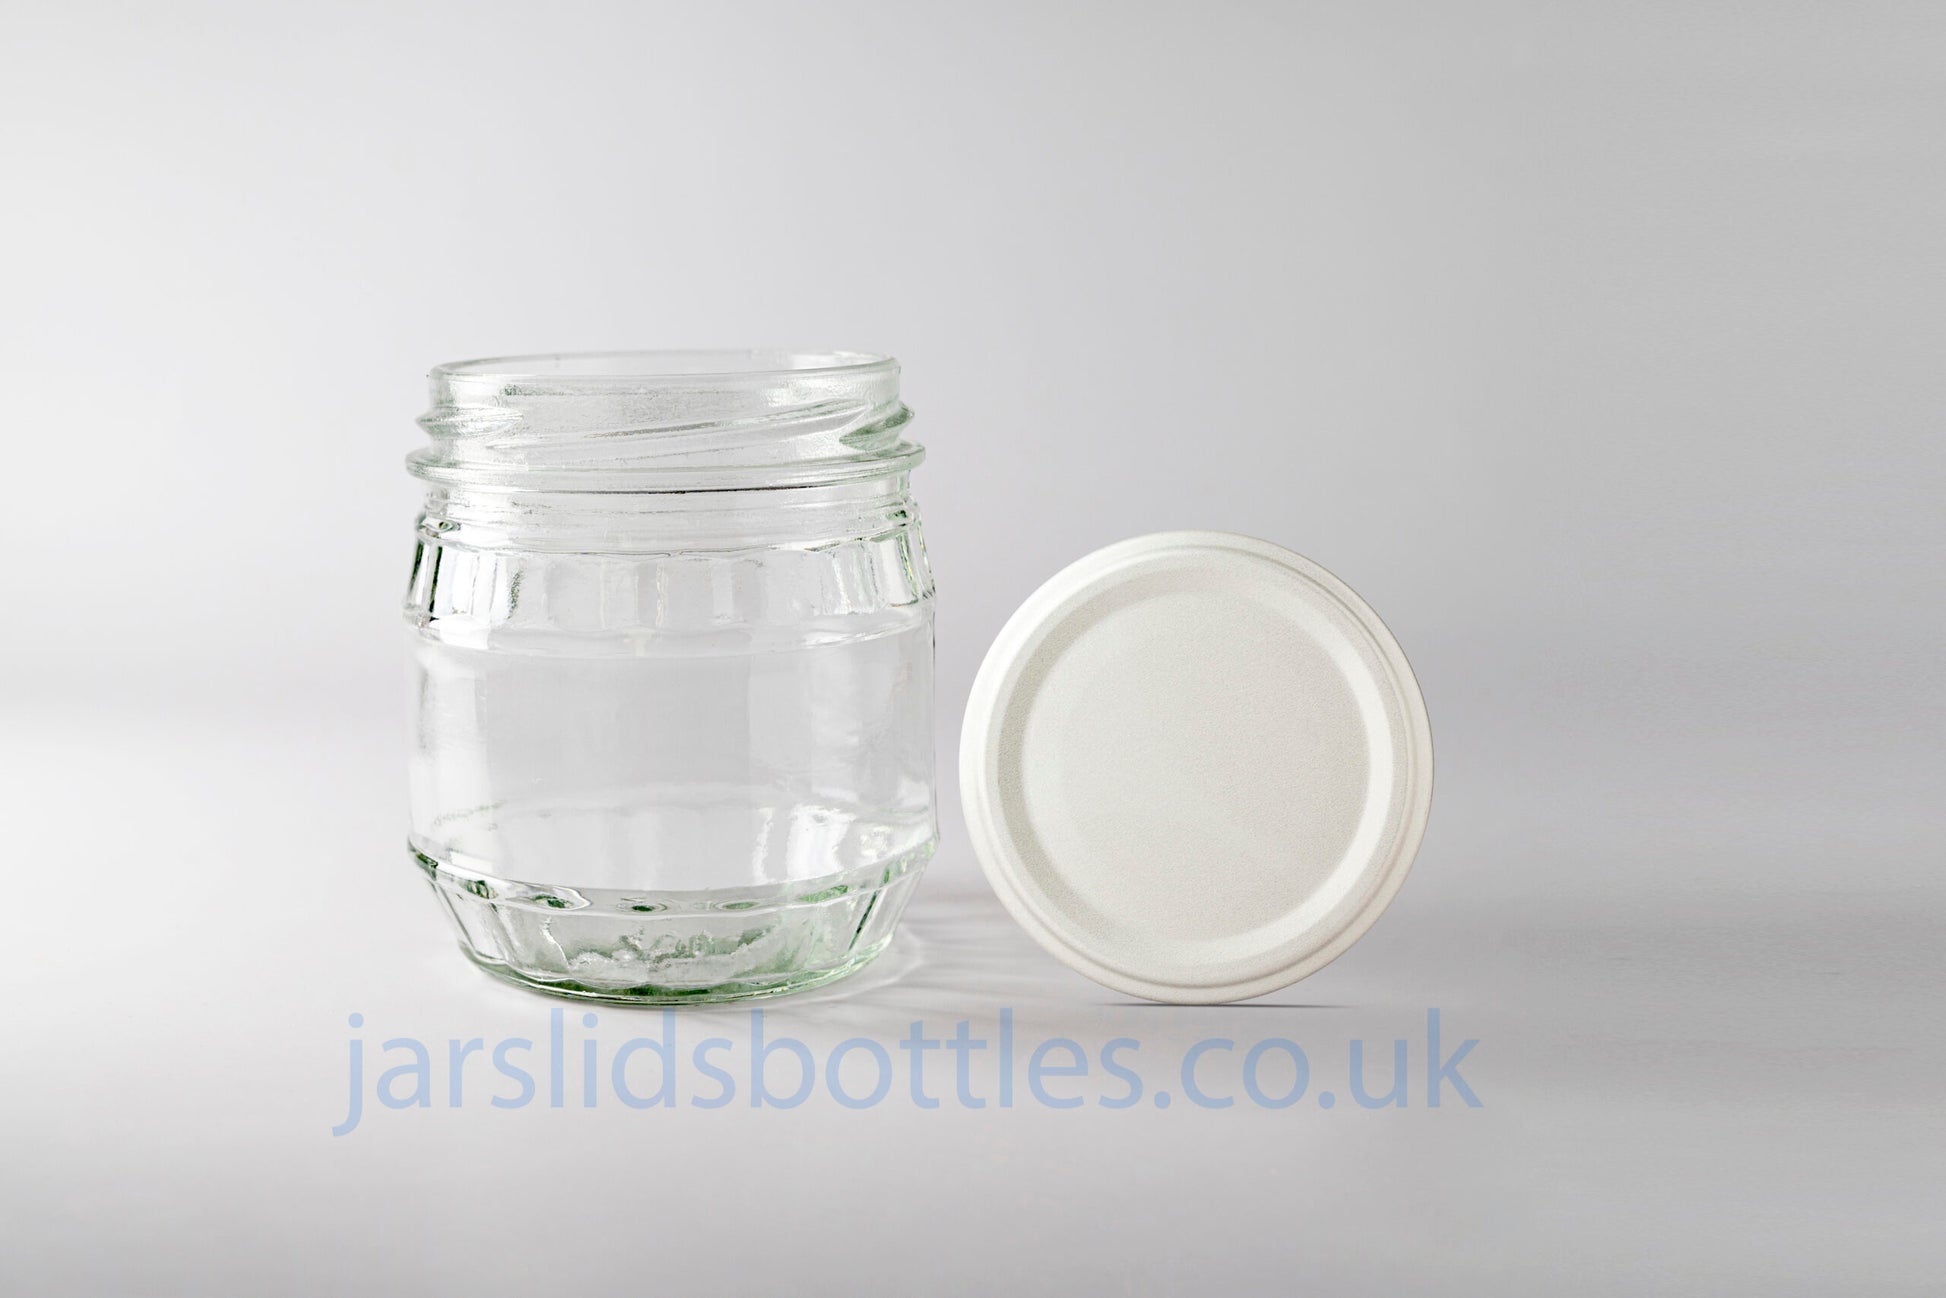 200 ml glass jar